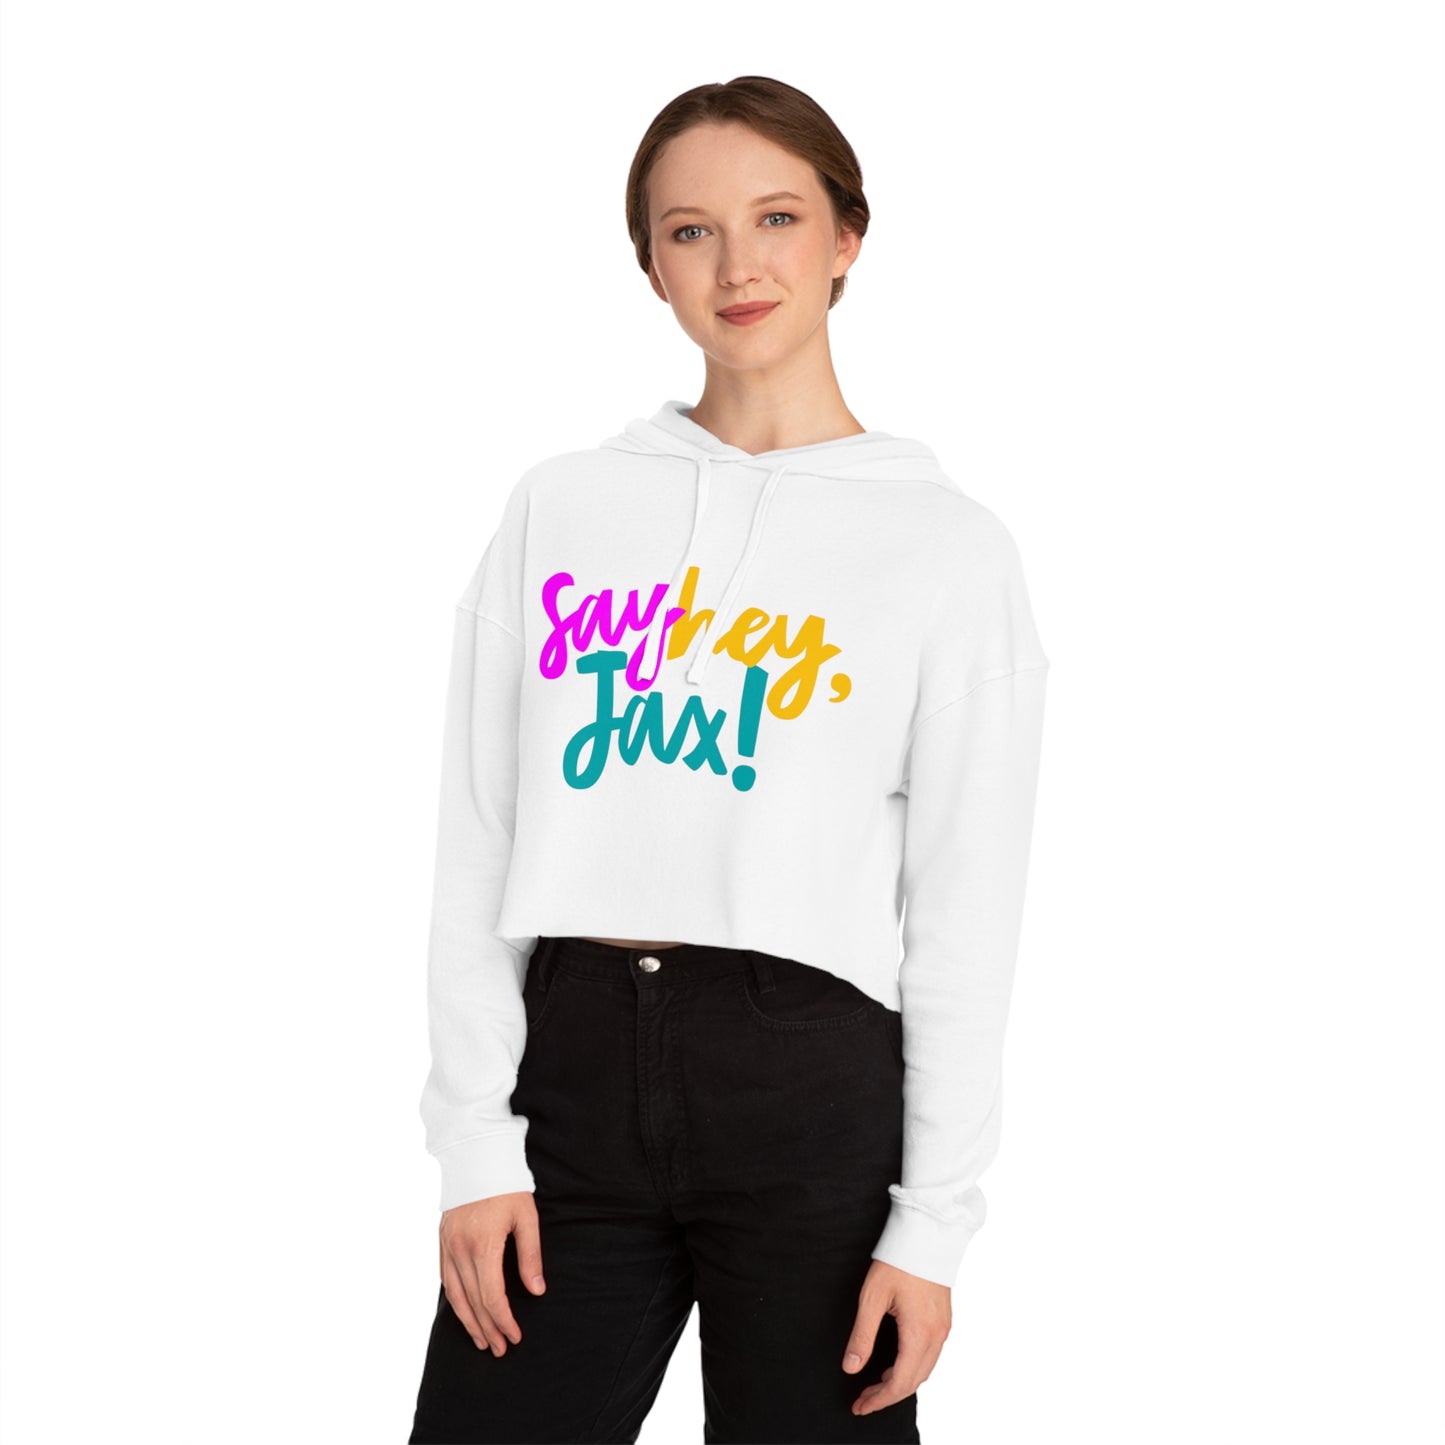 Say hey, Jax! Women’s Cropped Hooded Sweatshirt